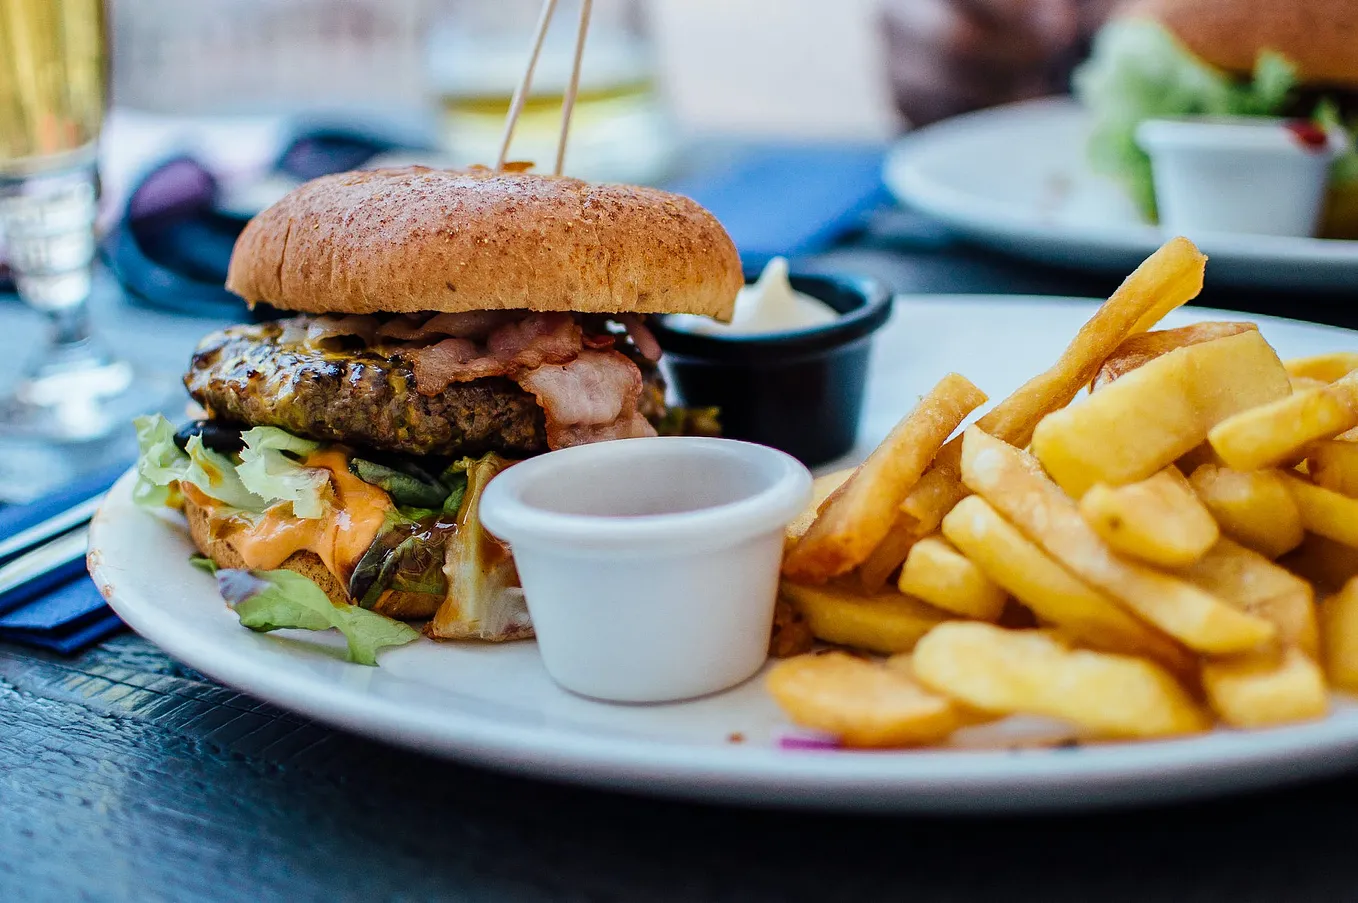 The Surprising Link Between Junk Food and Mental Health